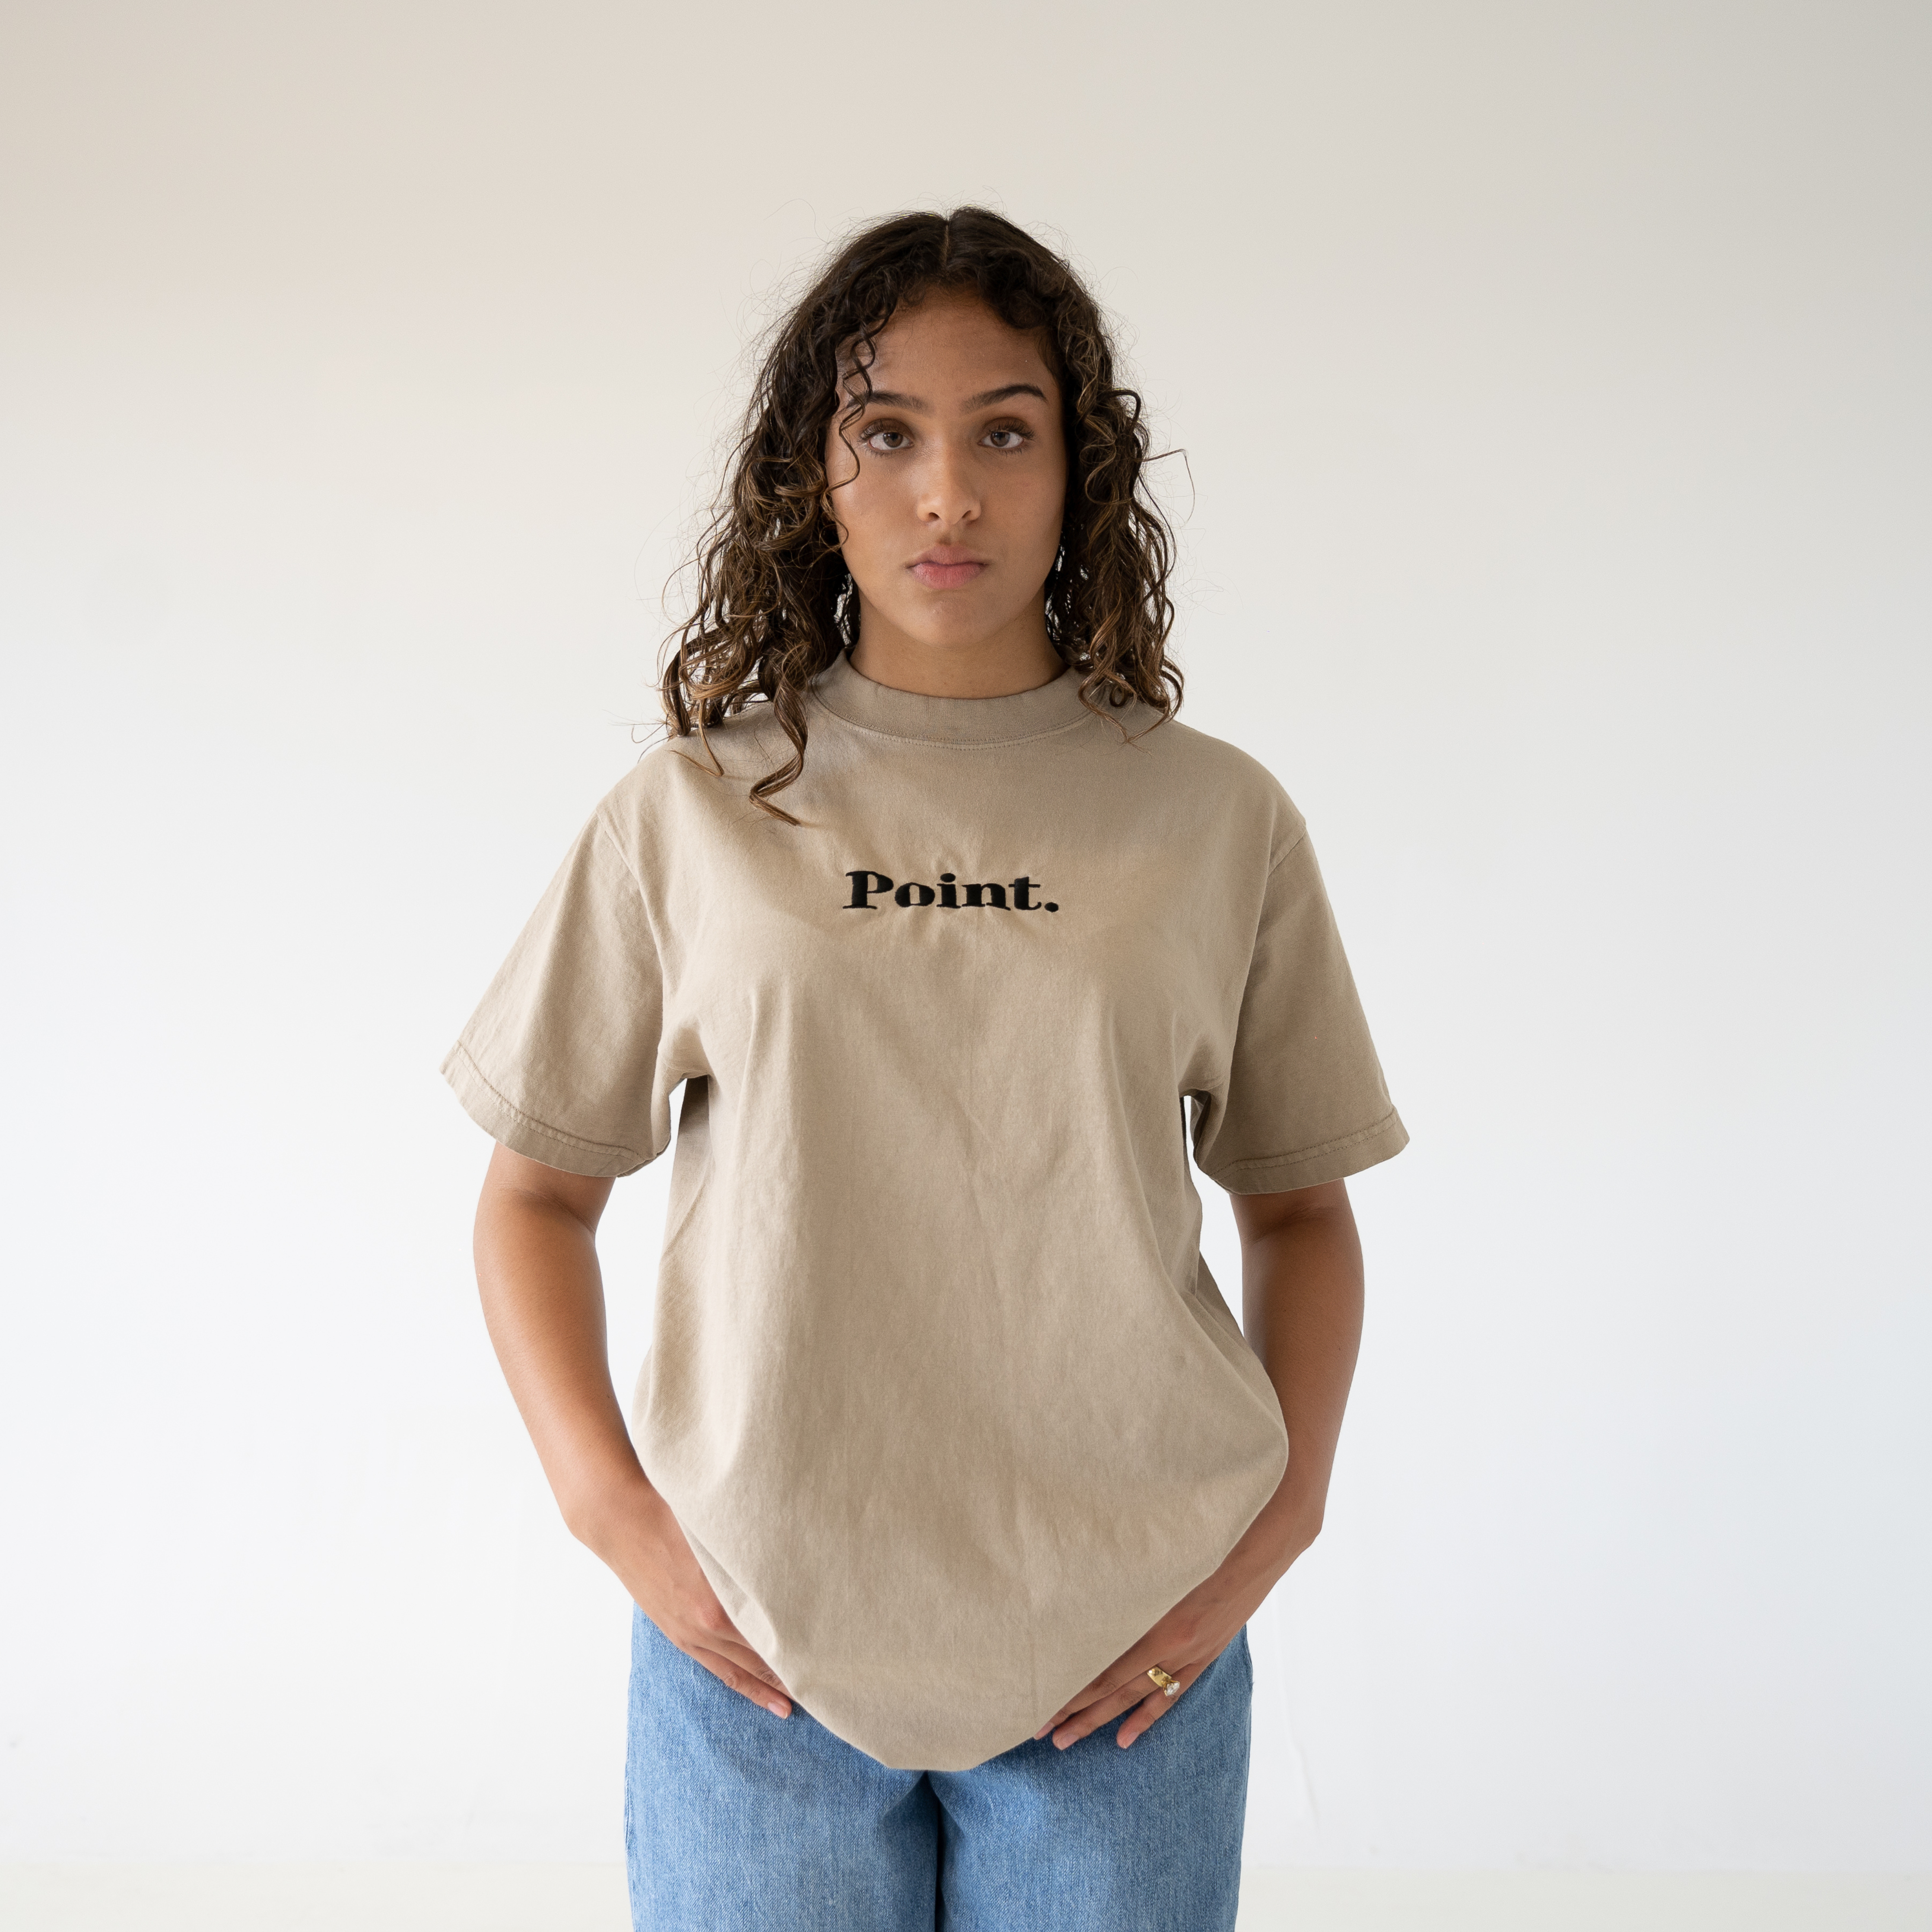 Point T-Shirt - Oatmeal